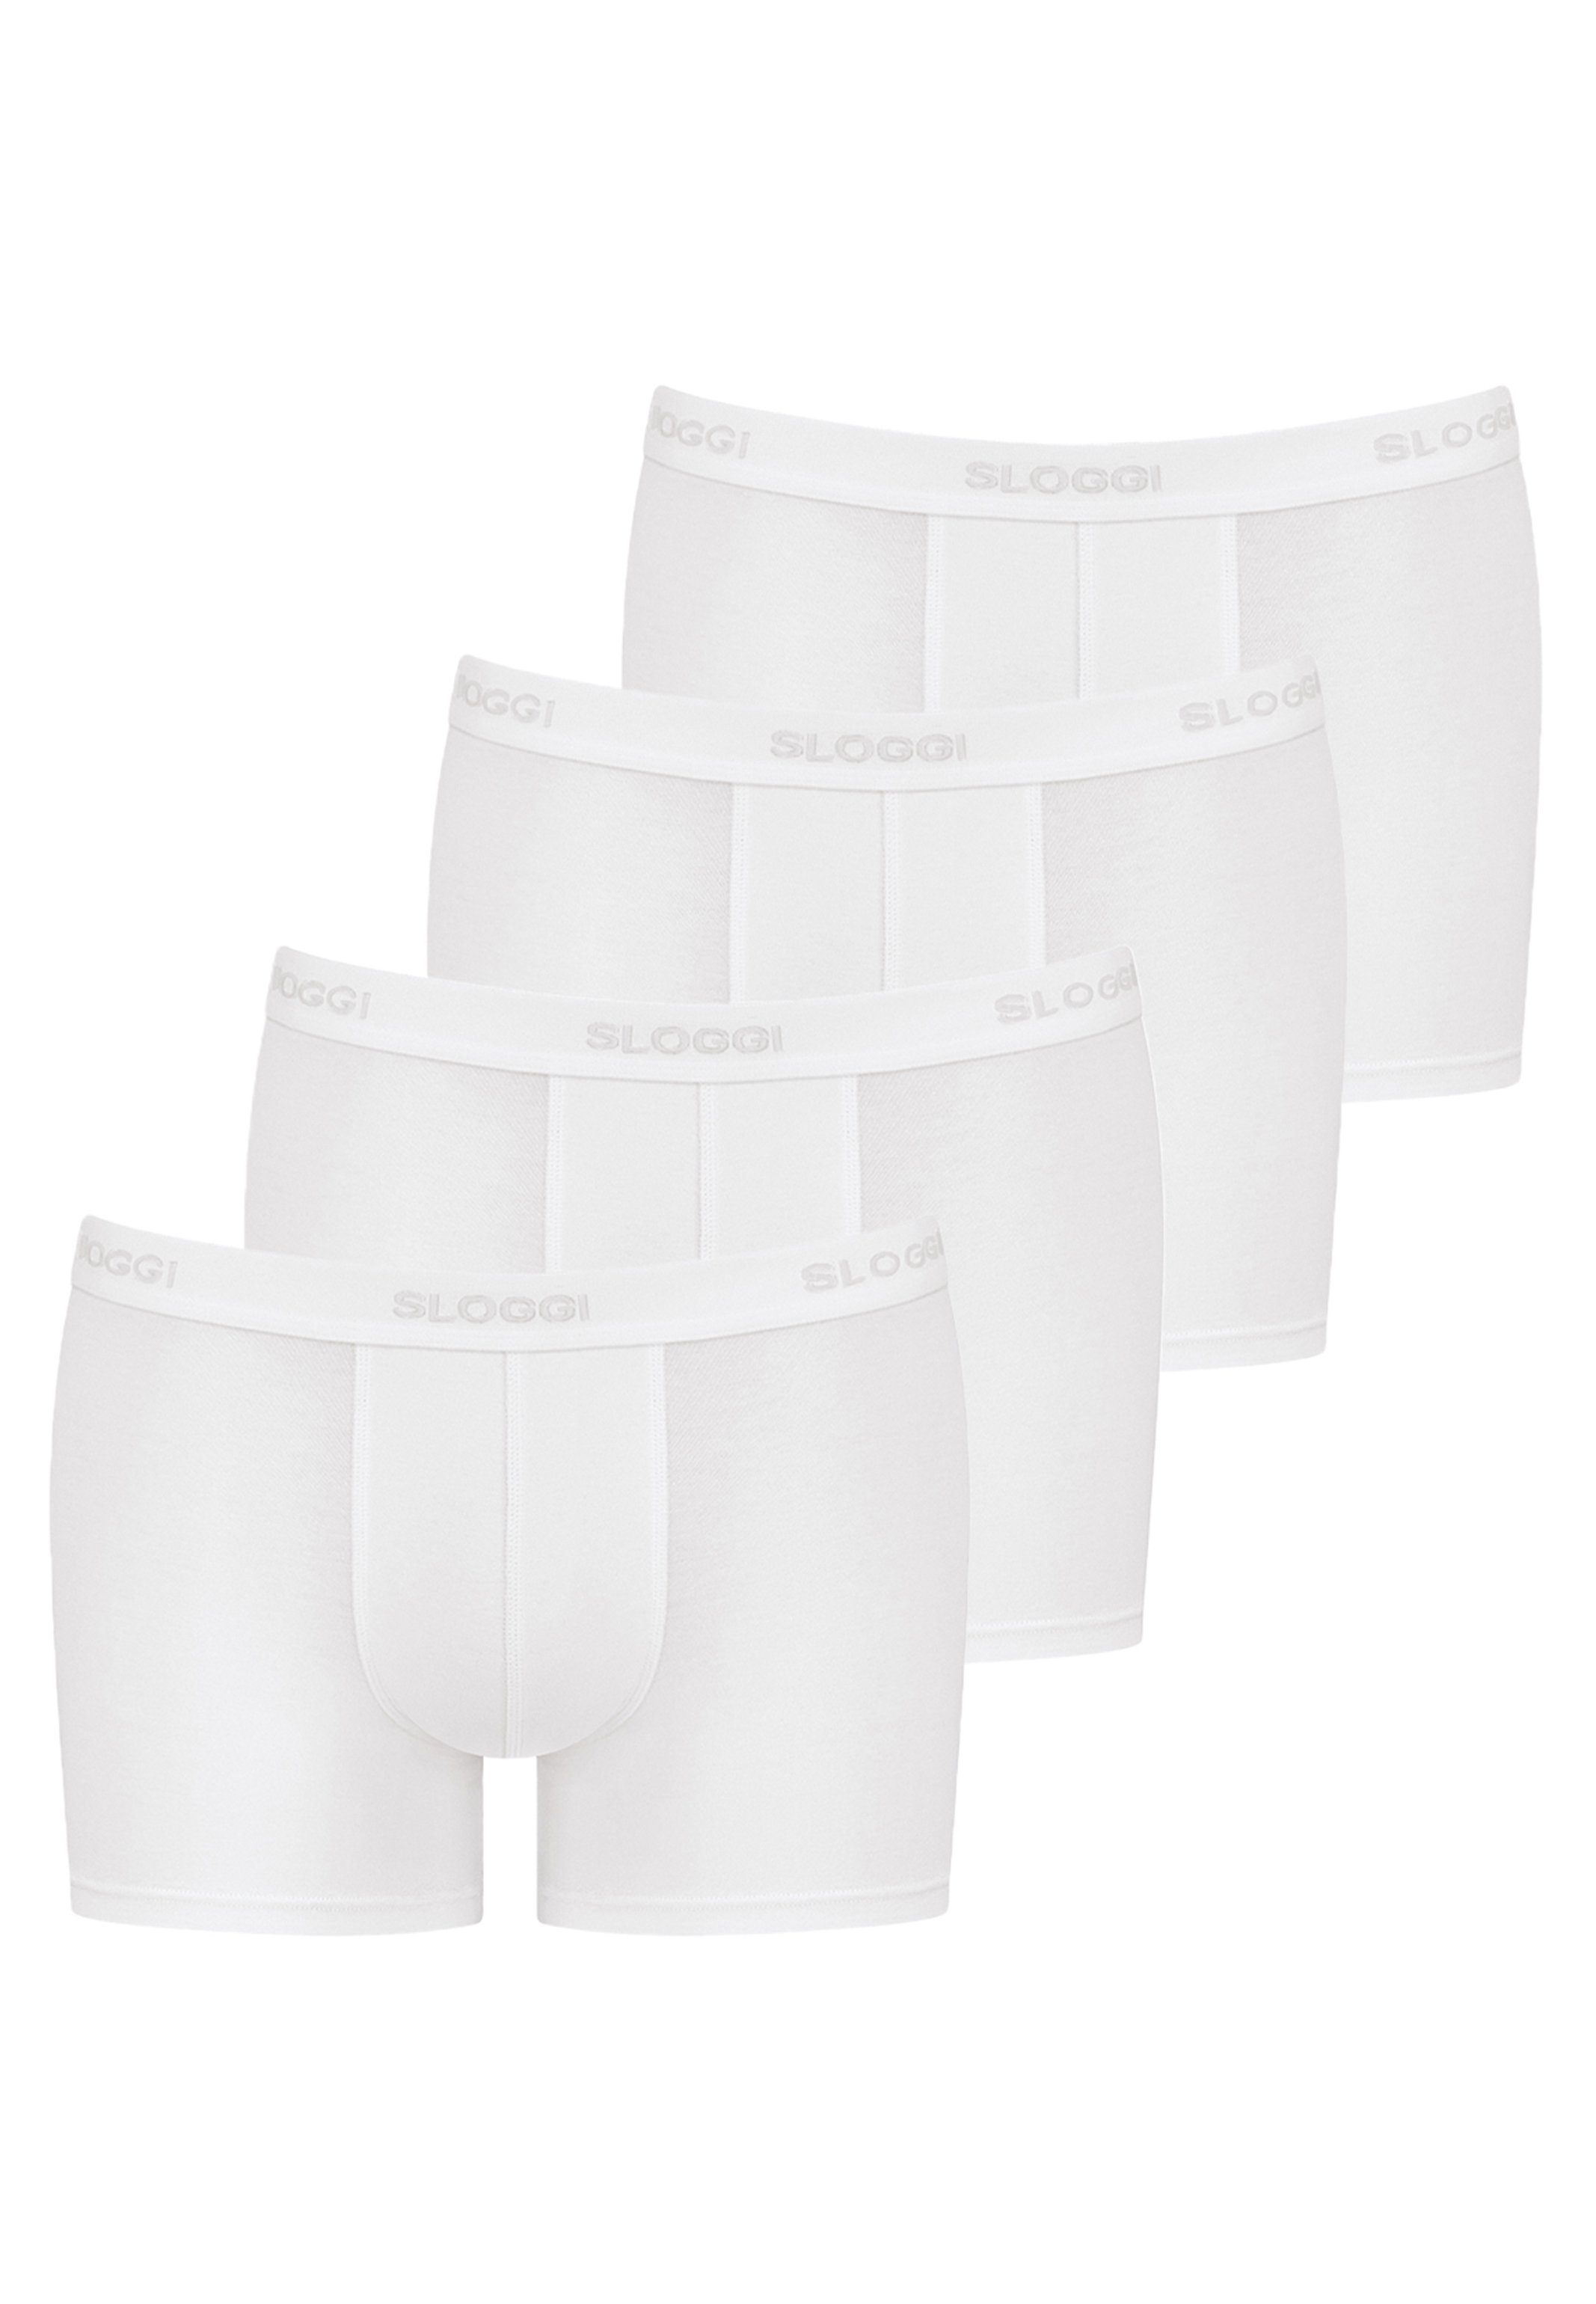 Sloggi Retro Boxer 4er Pack 24/7 (Spar-Set, 4-St) Long Short / Pant - Baumwolle - Ohne Eingriff - Weiß